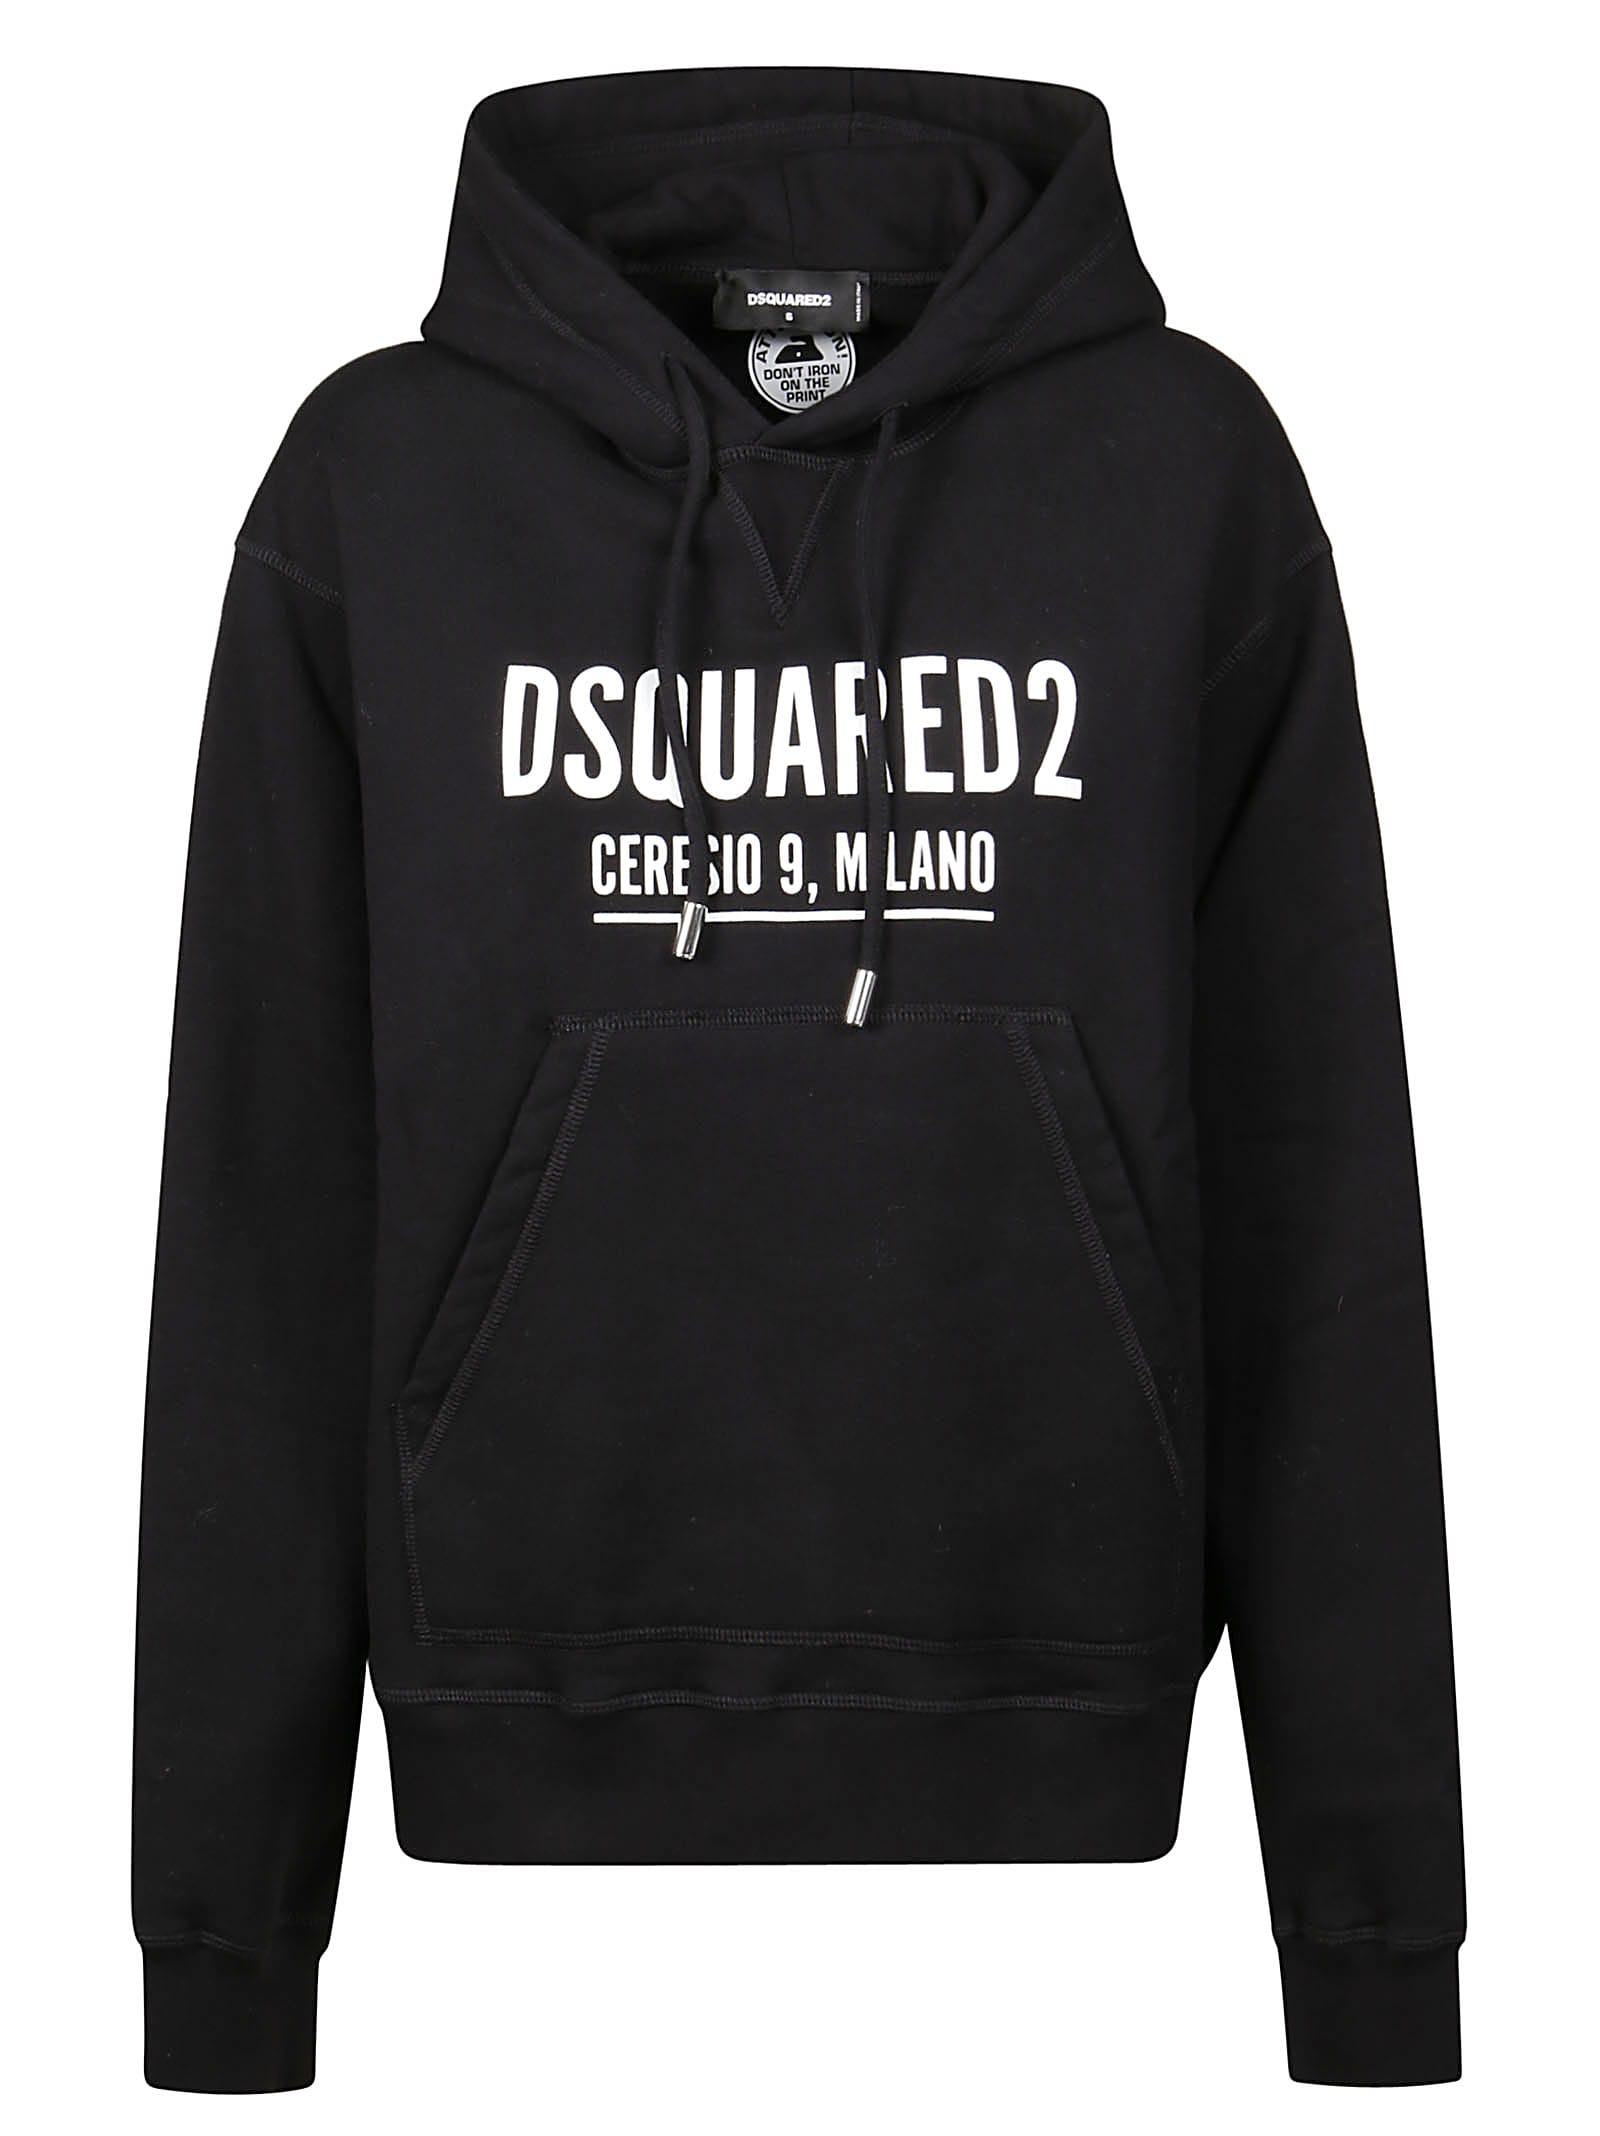 Shop Dsquared2 Ceresio9 Sweatshirt